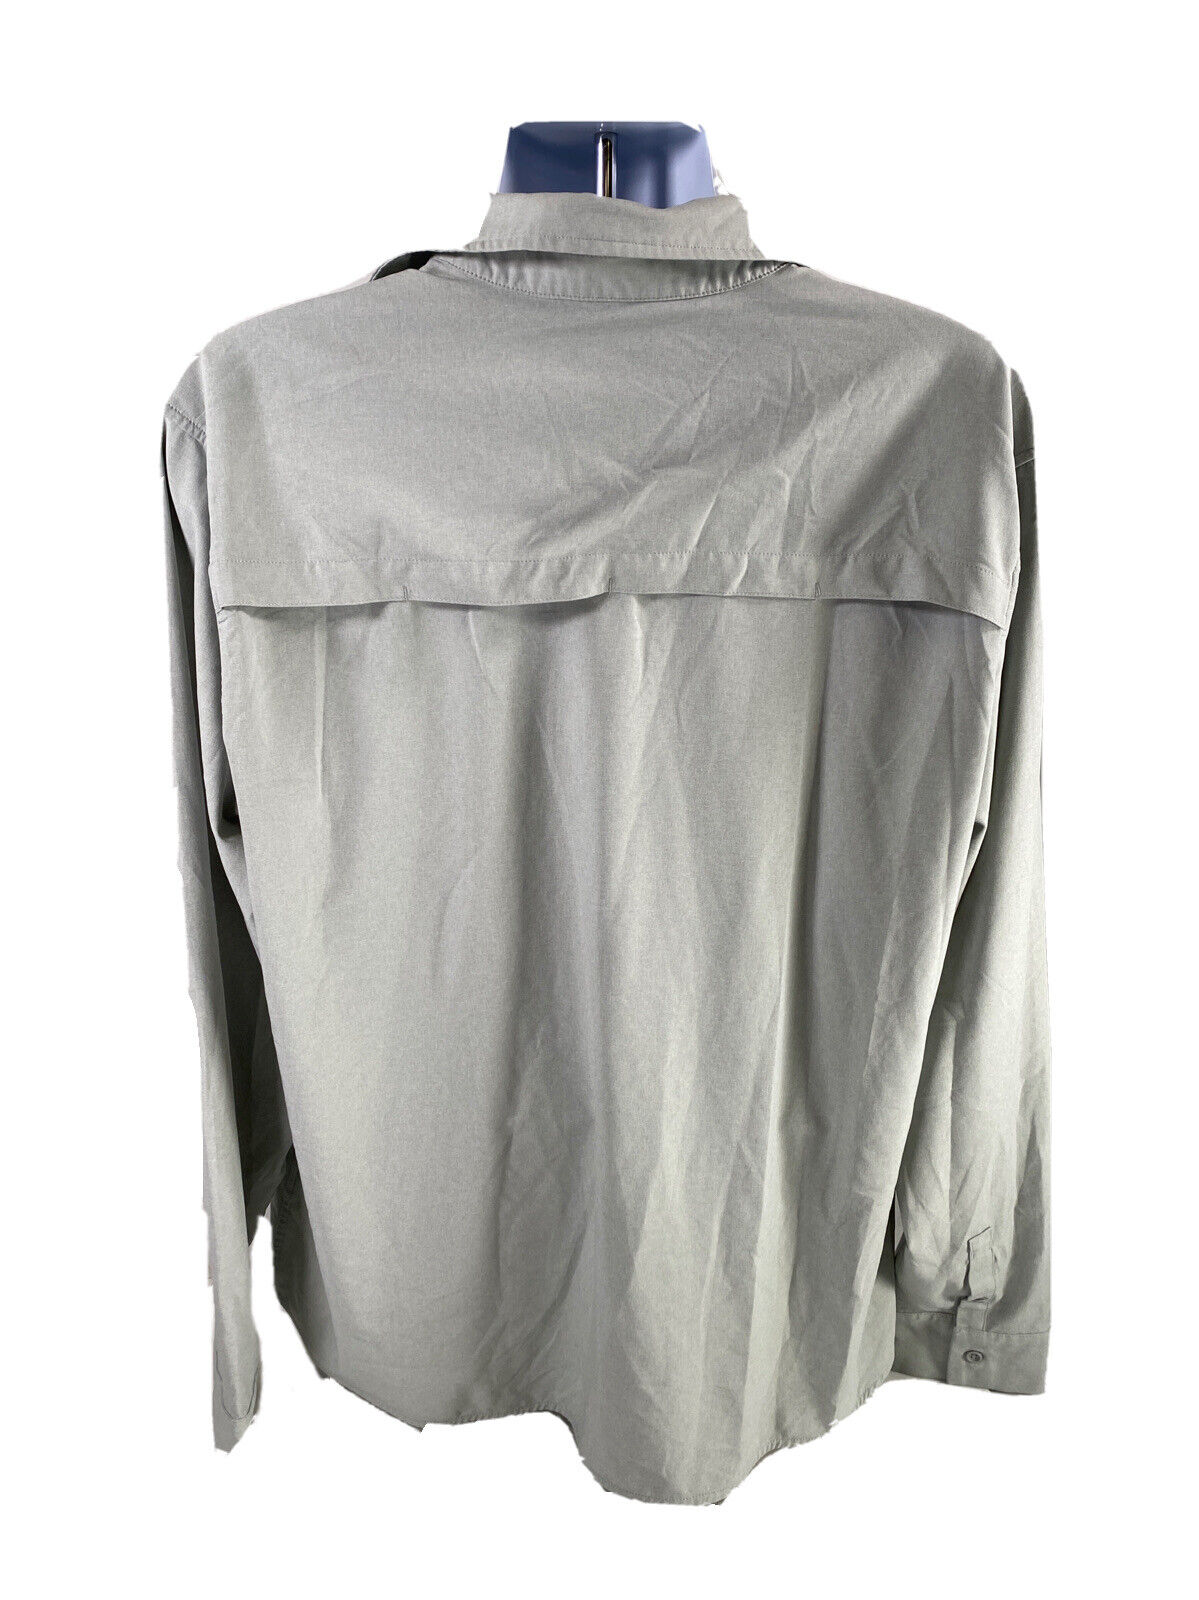 Merrell Camisa casual con botones, ligera, de manga larga, gris, para hombre - XL